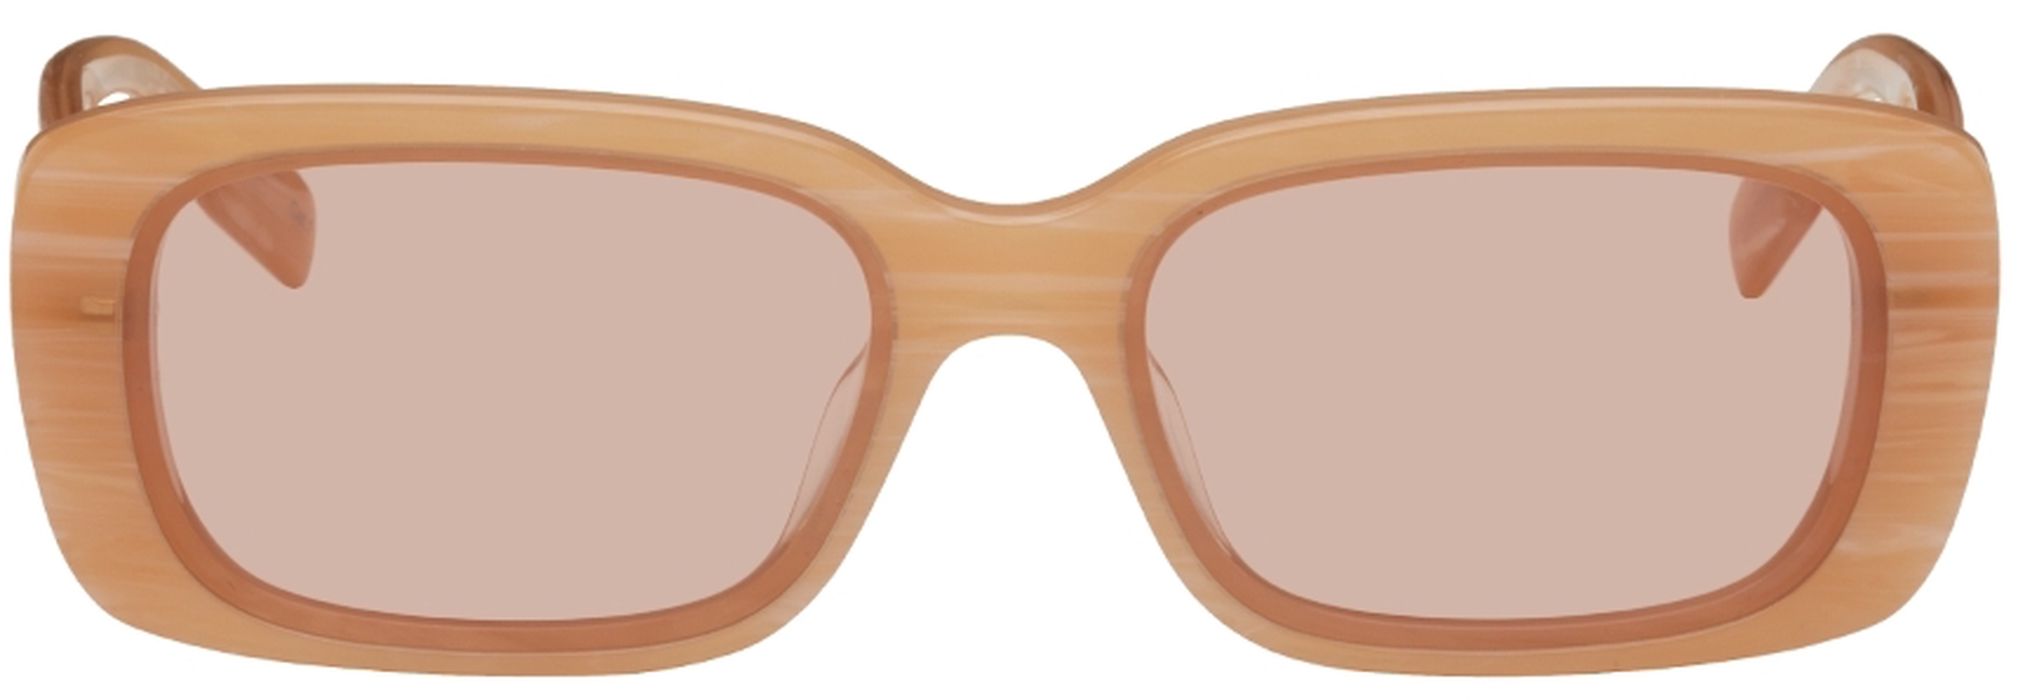 MCQ Pink Rectangular Sunglasses